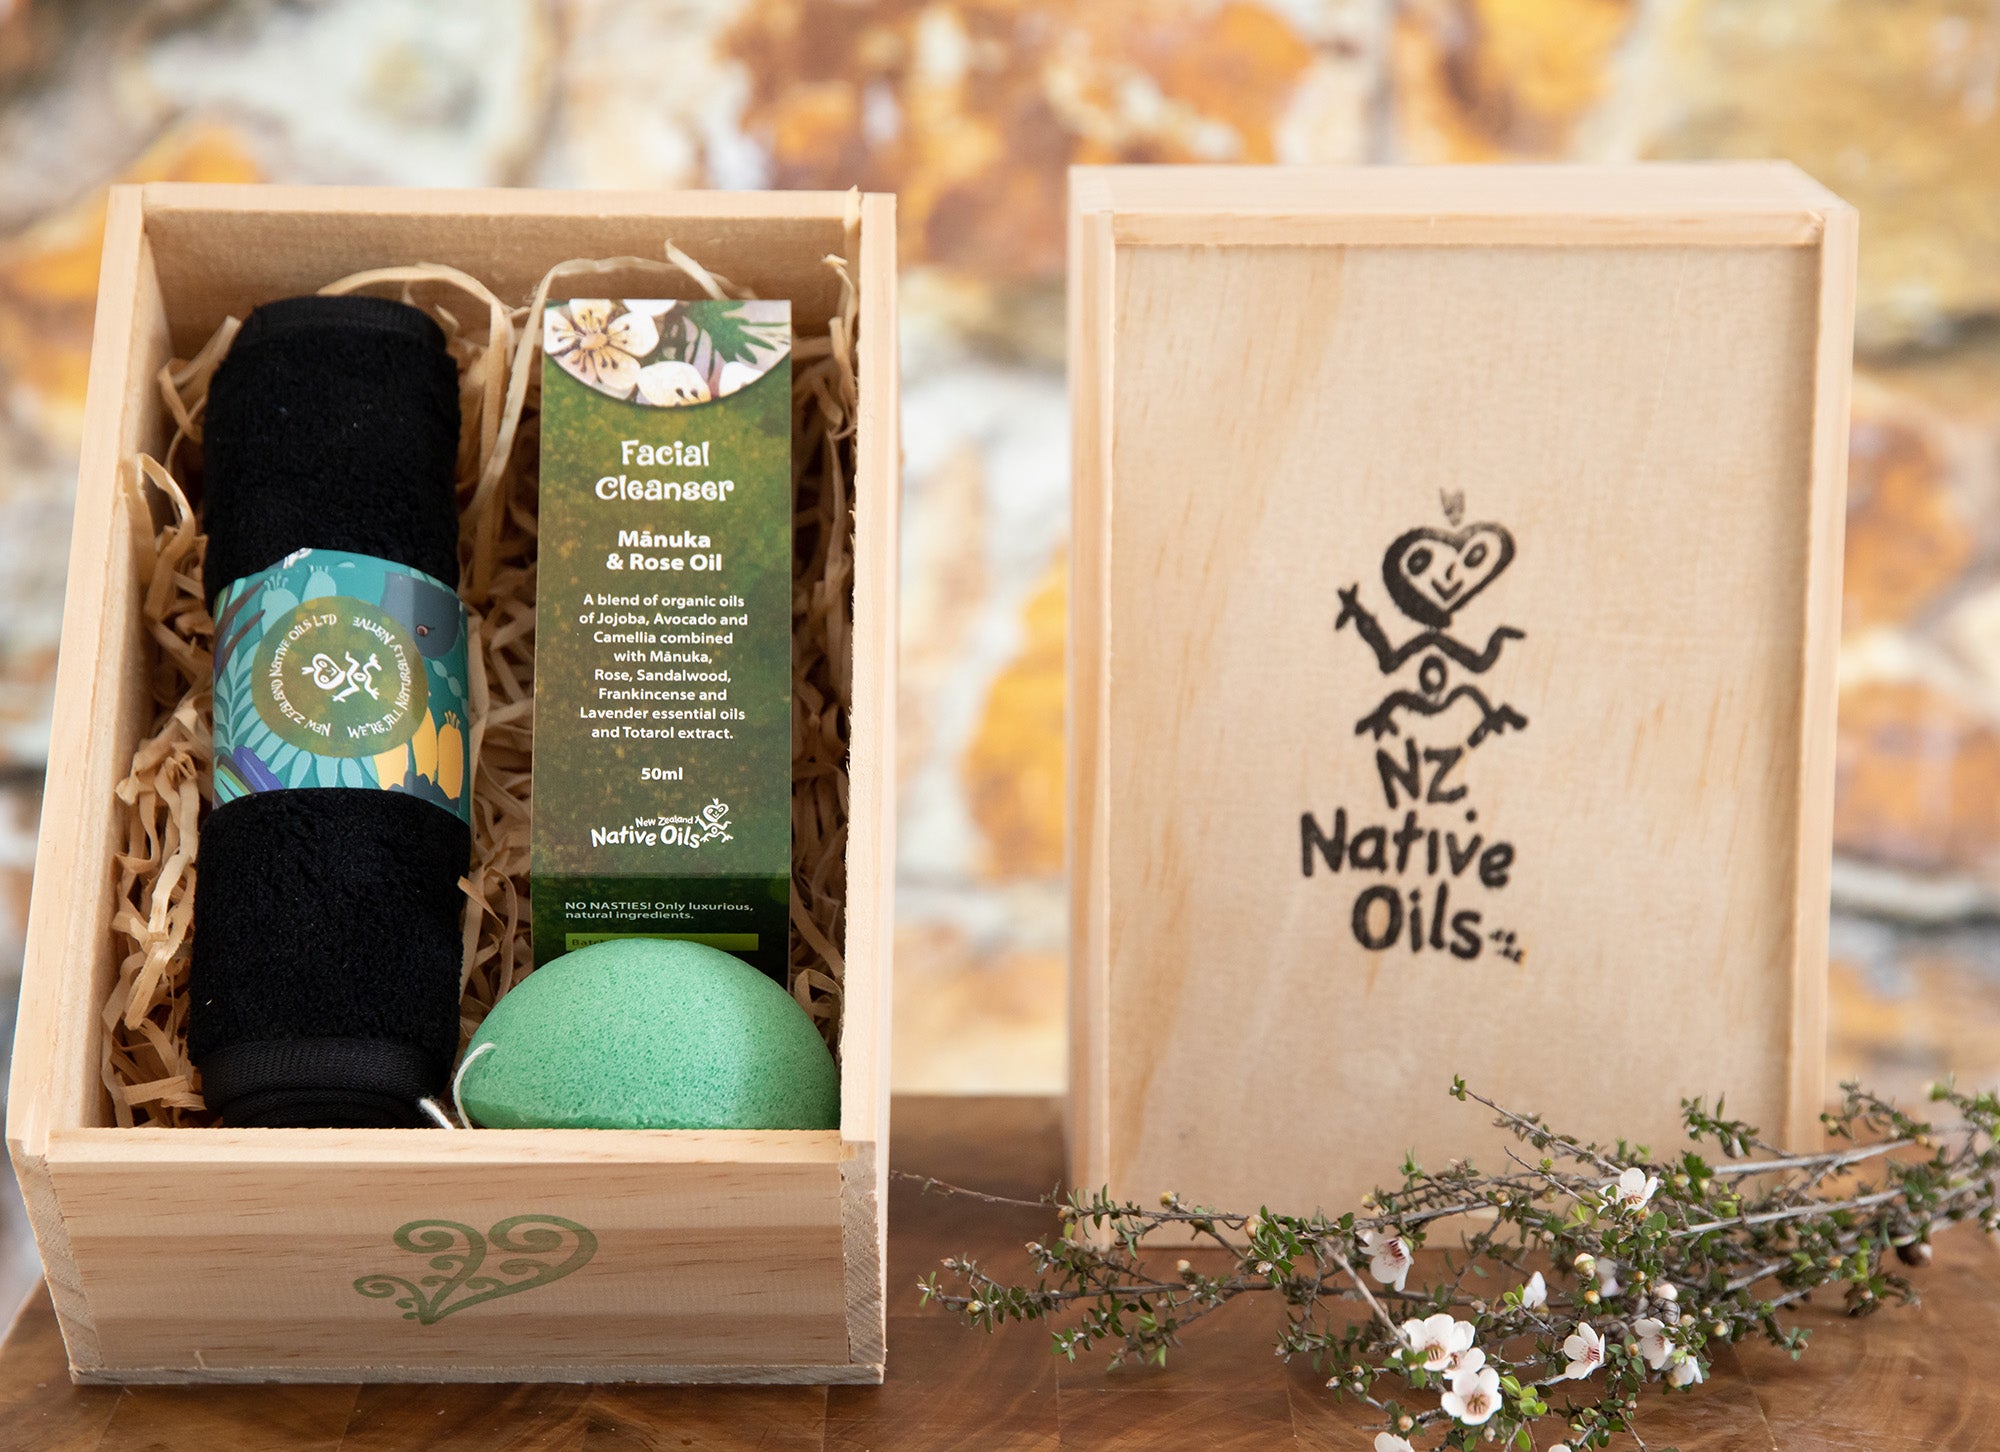 Cleansing Gift Box-NZ Native Oils Ltd